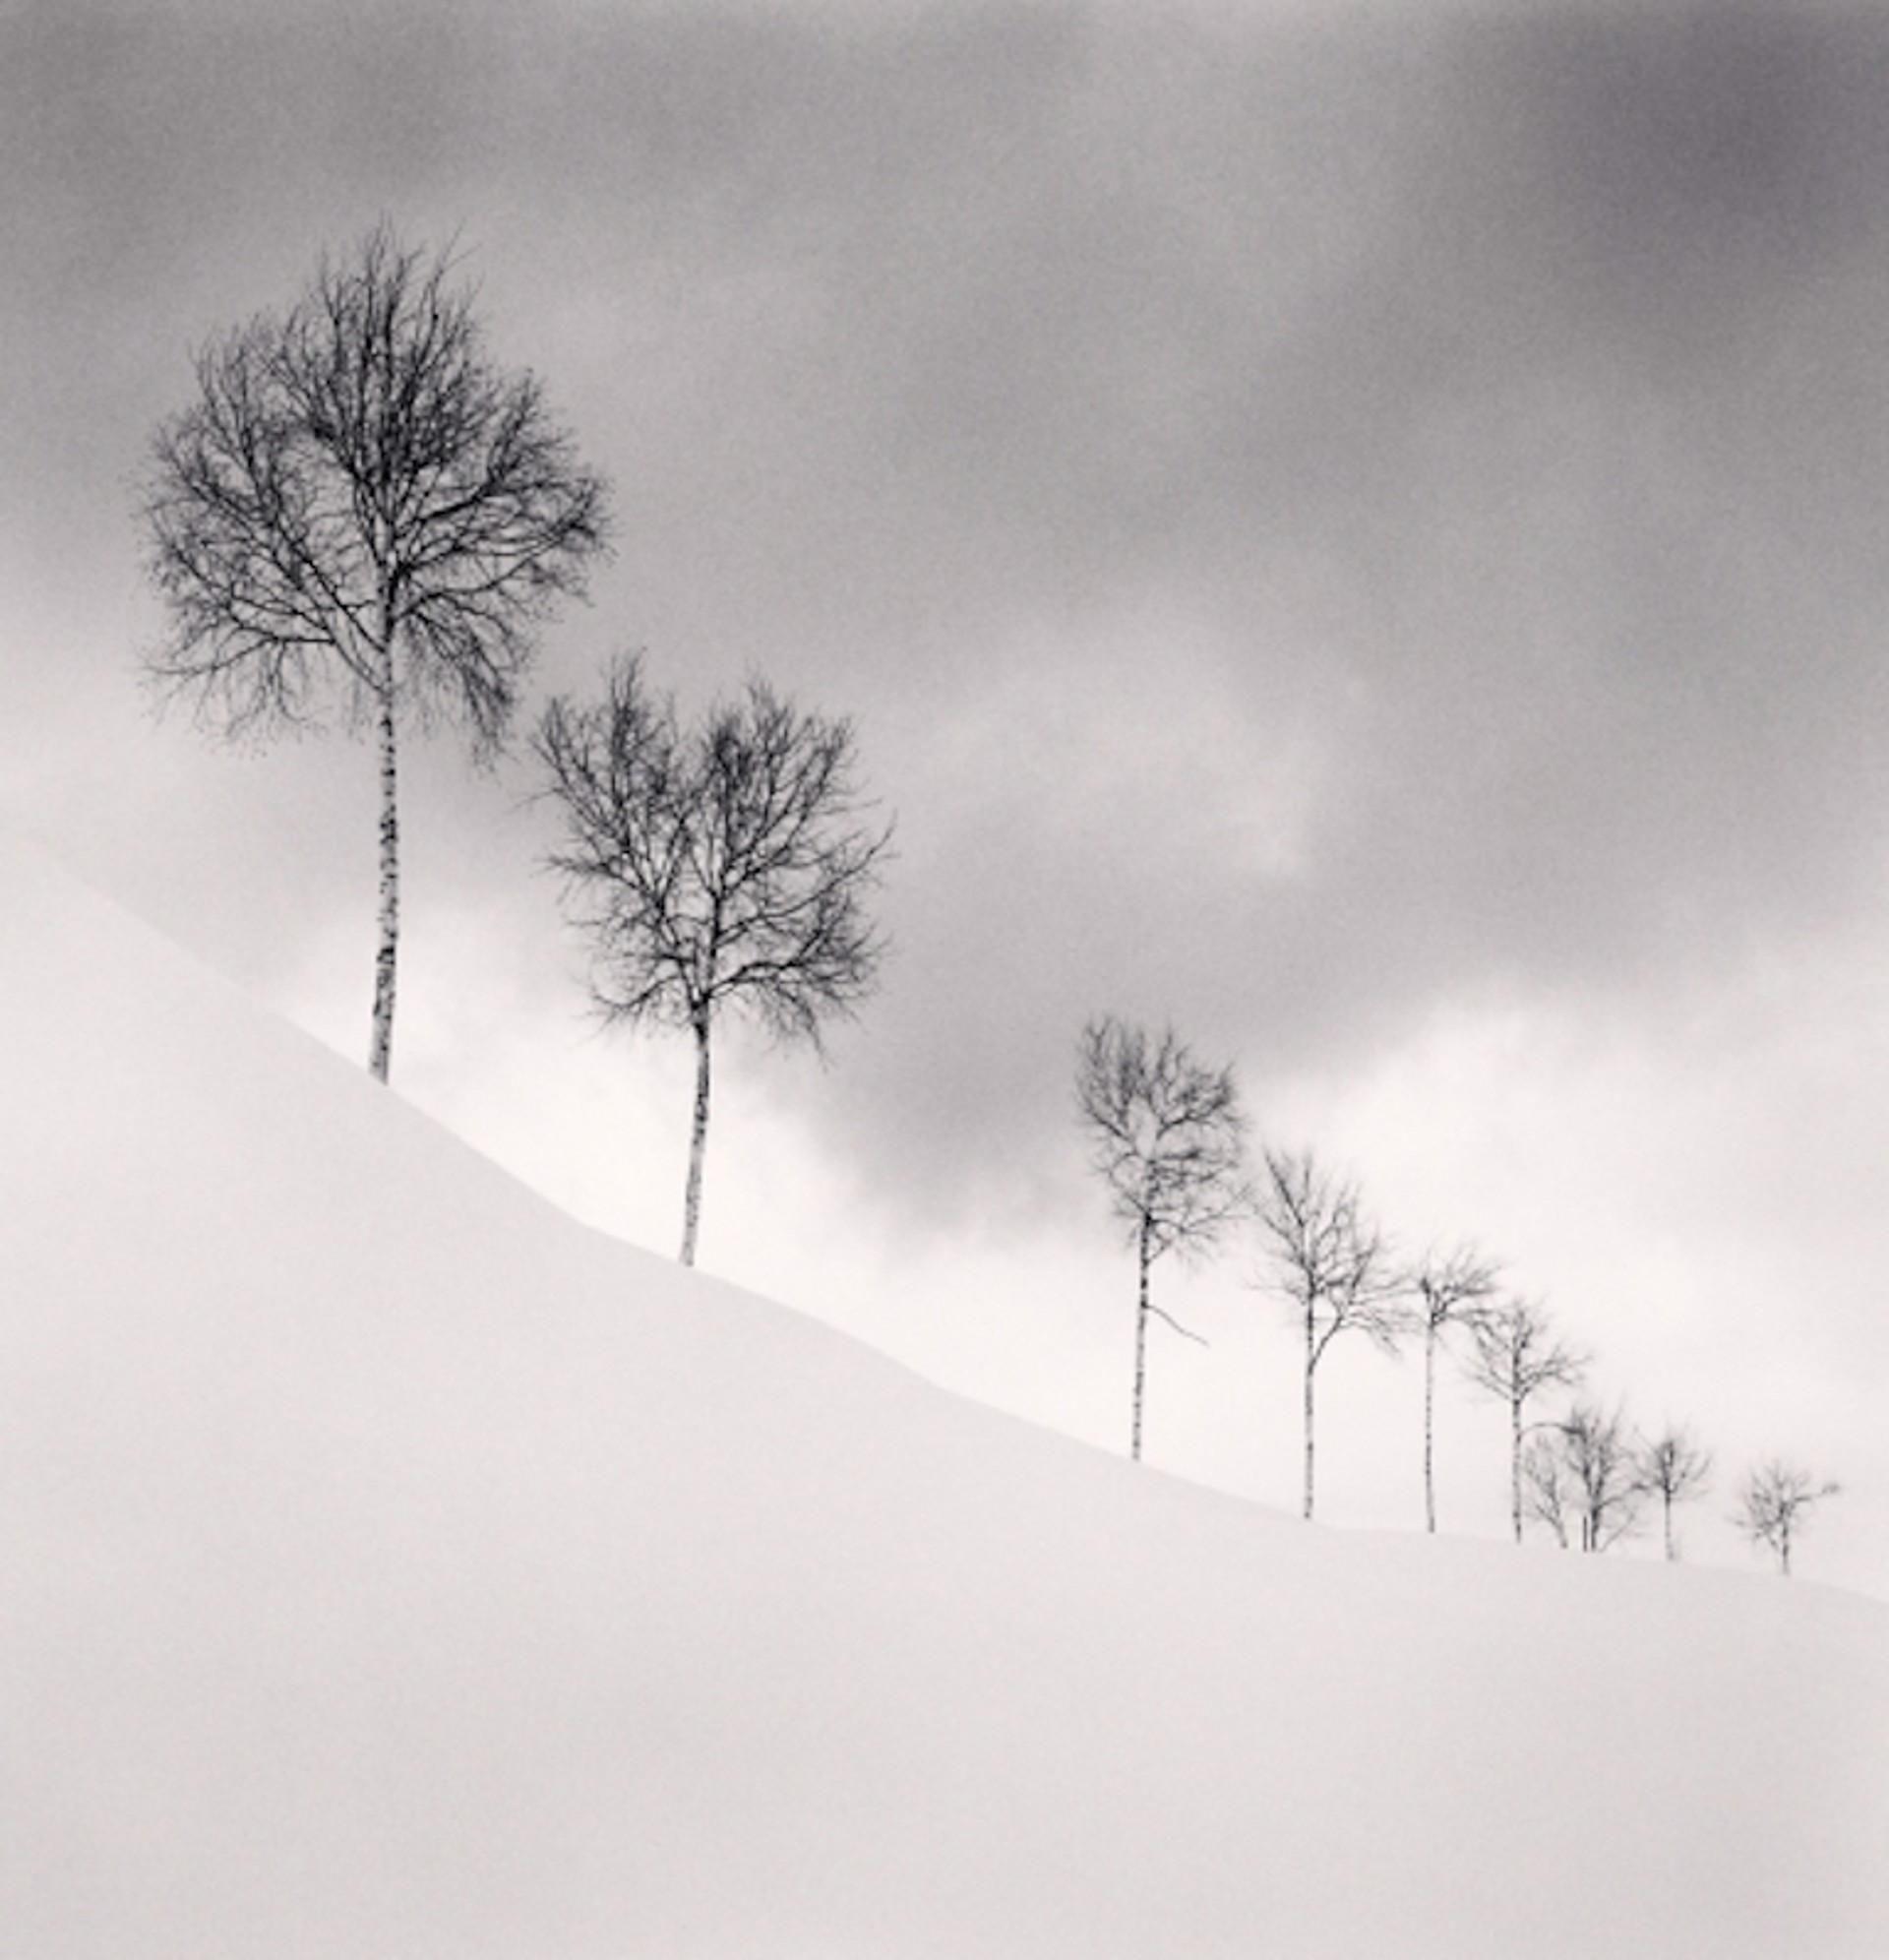 Nine Silver Birches, Shibetsu, Hokkaido, Japan (edition of 45) by Michael Kenna